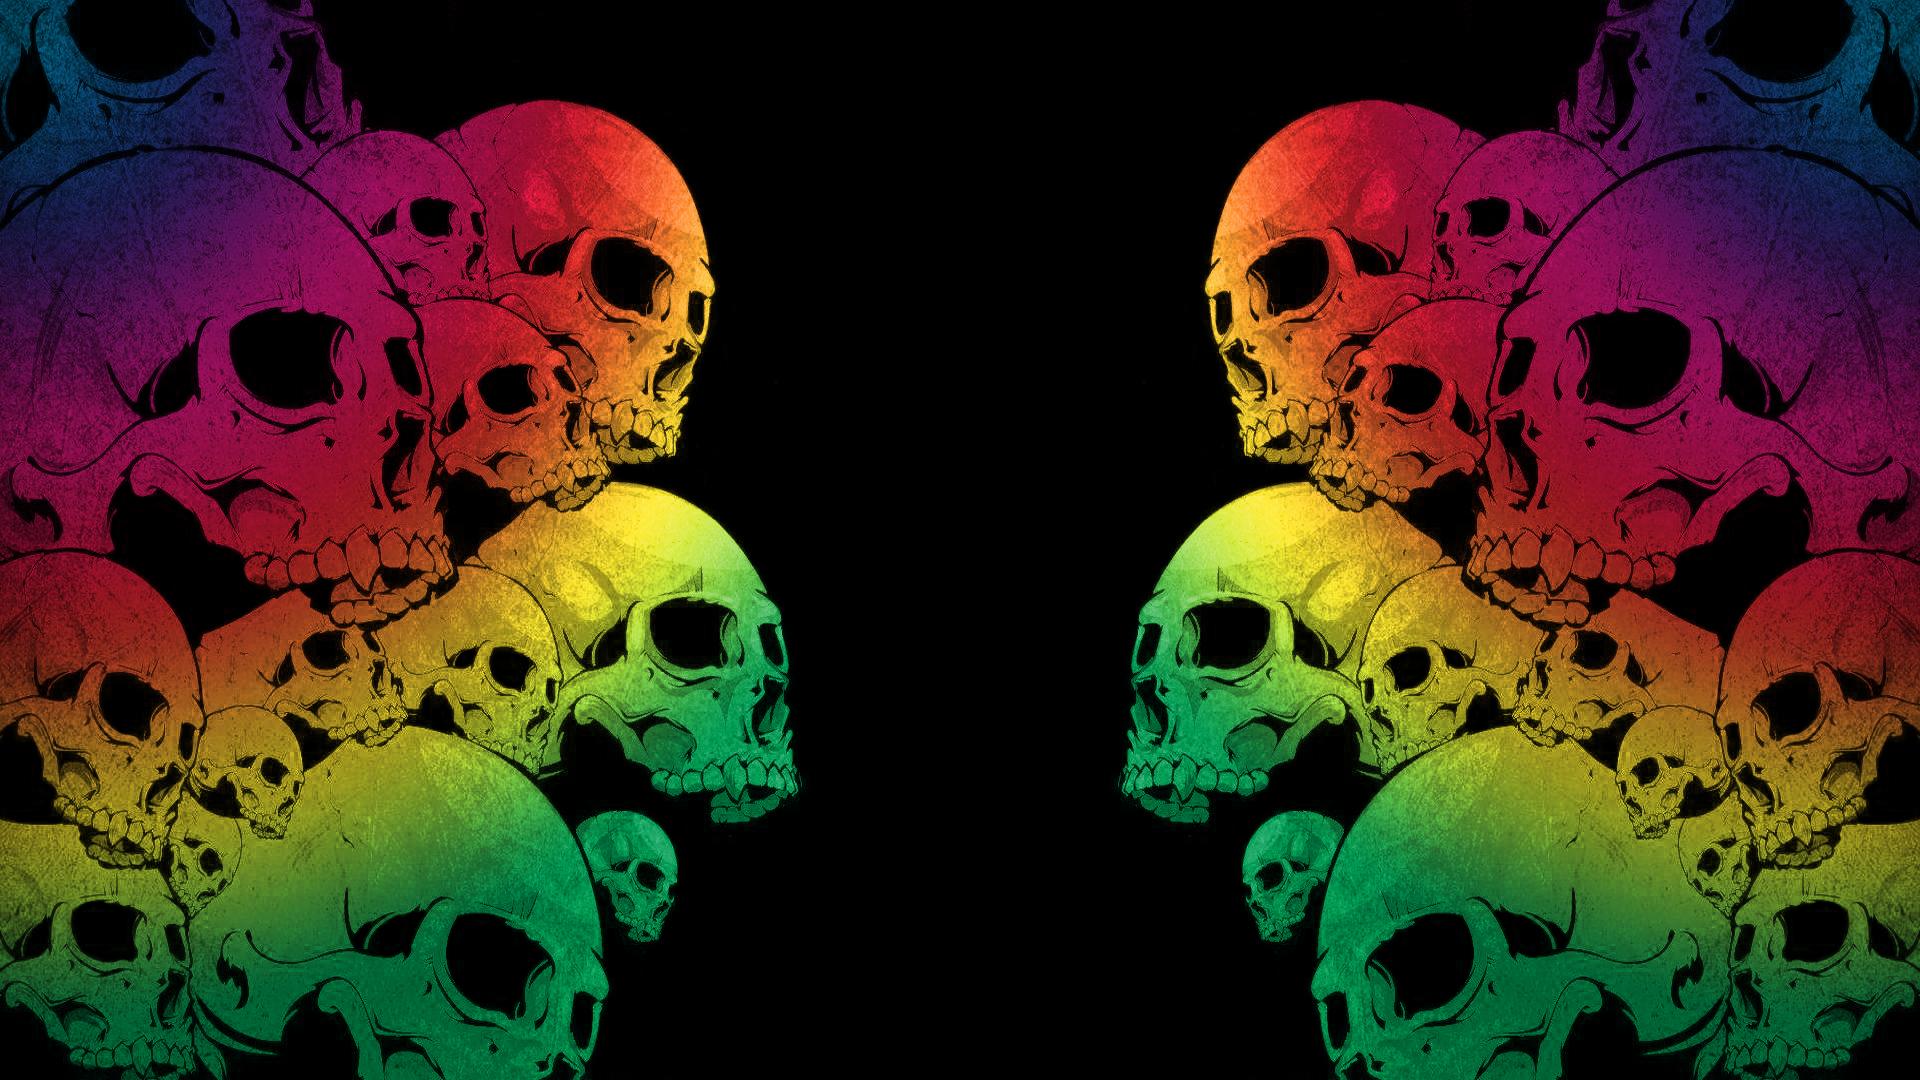 Dark Skull HD Wallpaper | Background Image | 1920x1080